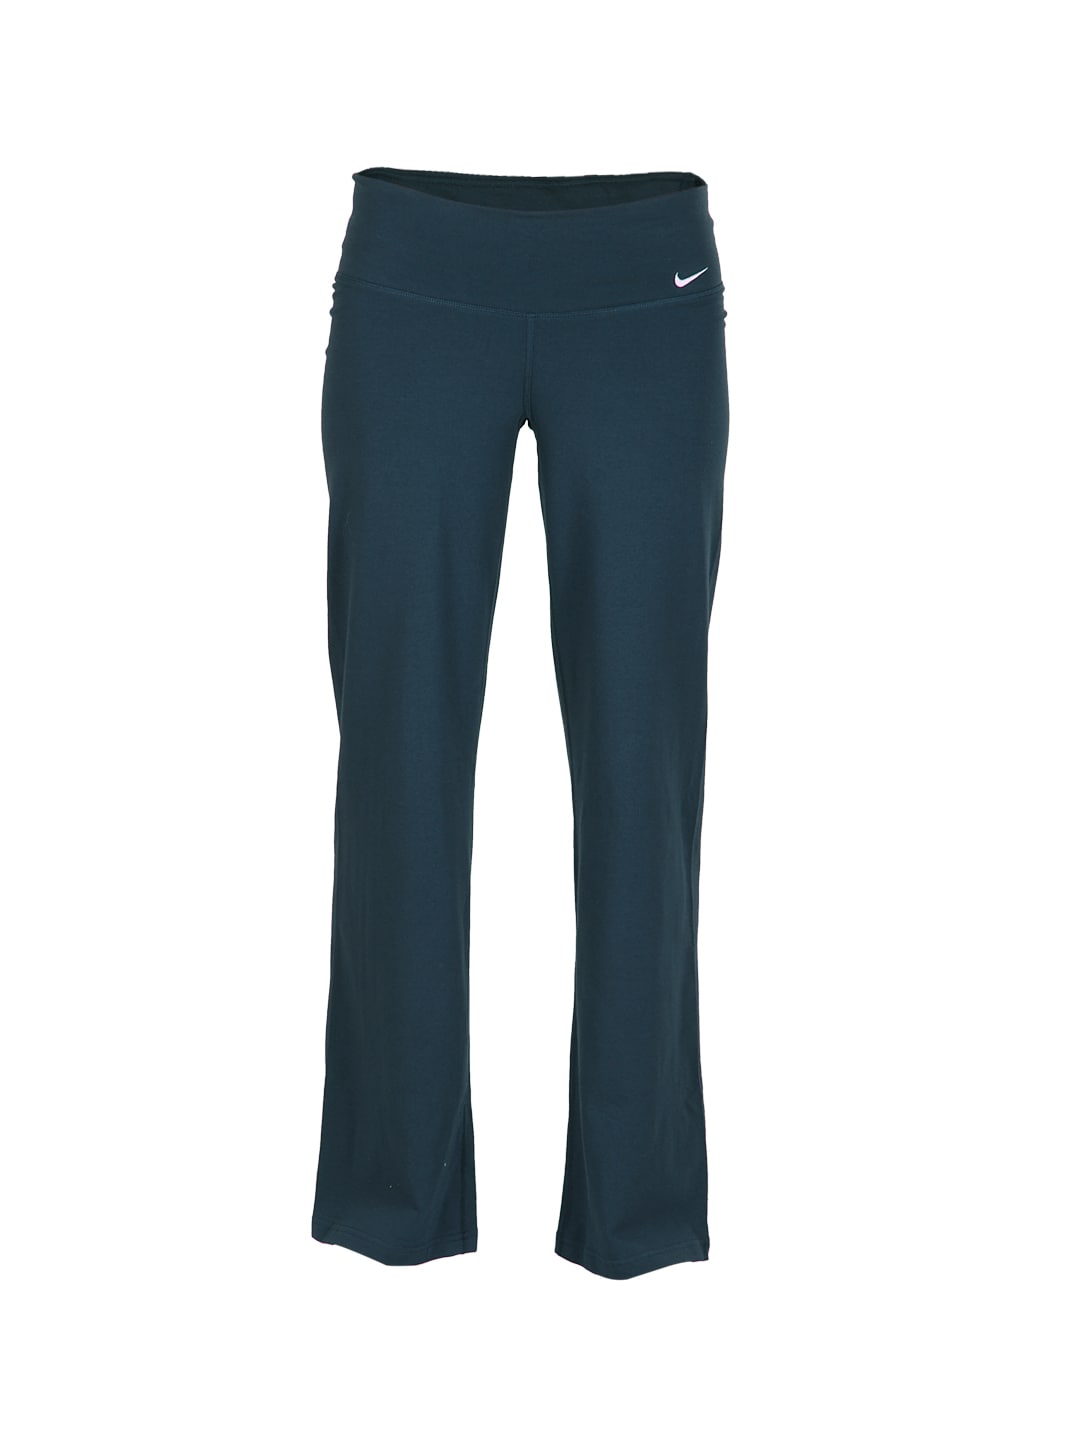 Nike Women Navy Blue Track Pant